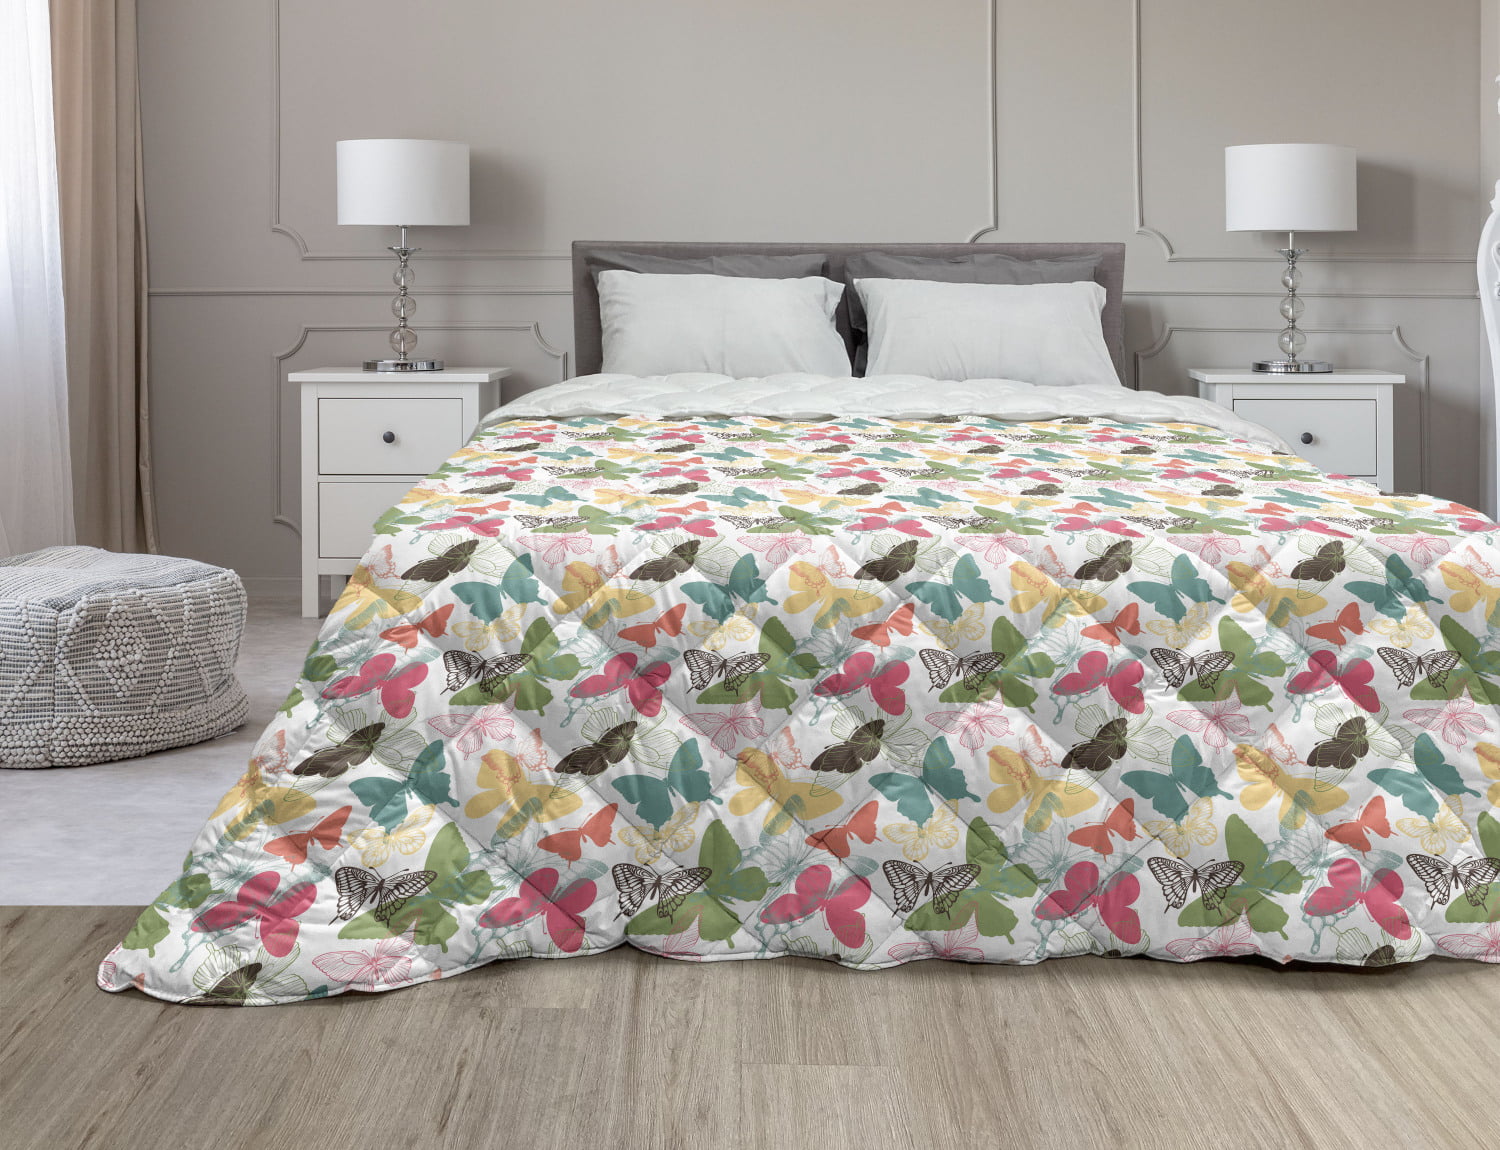 Details about   10 Piece Comforter Set Luxurious Brushed Microfiber Down Alternative Comforter 